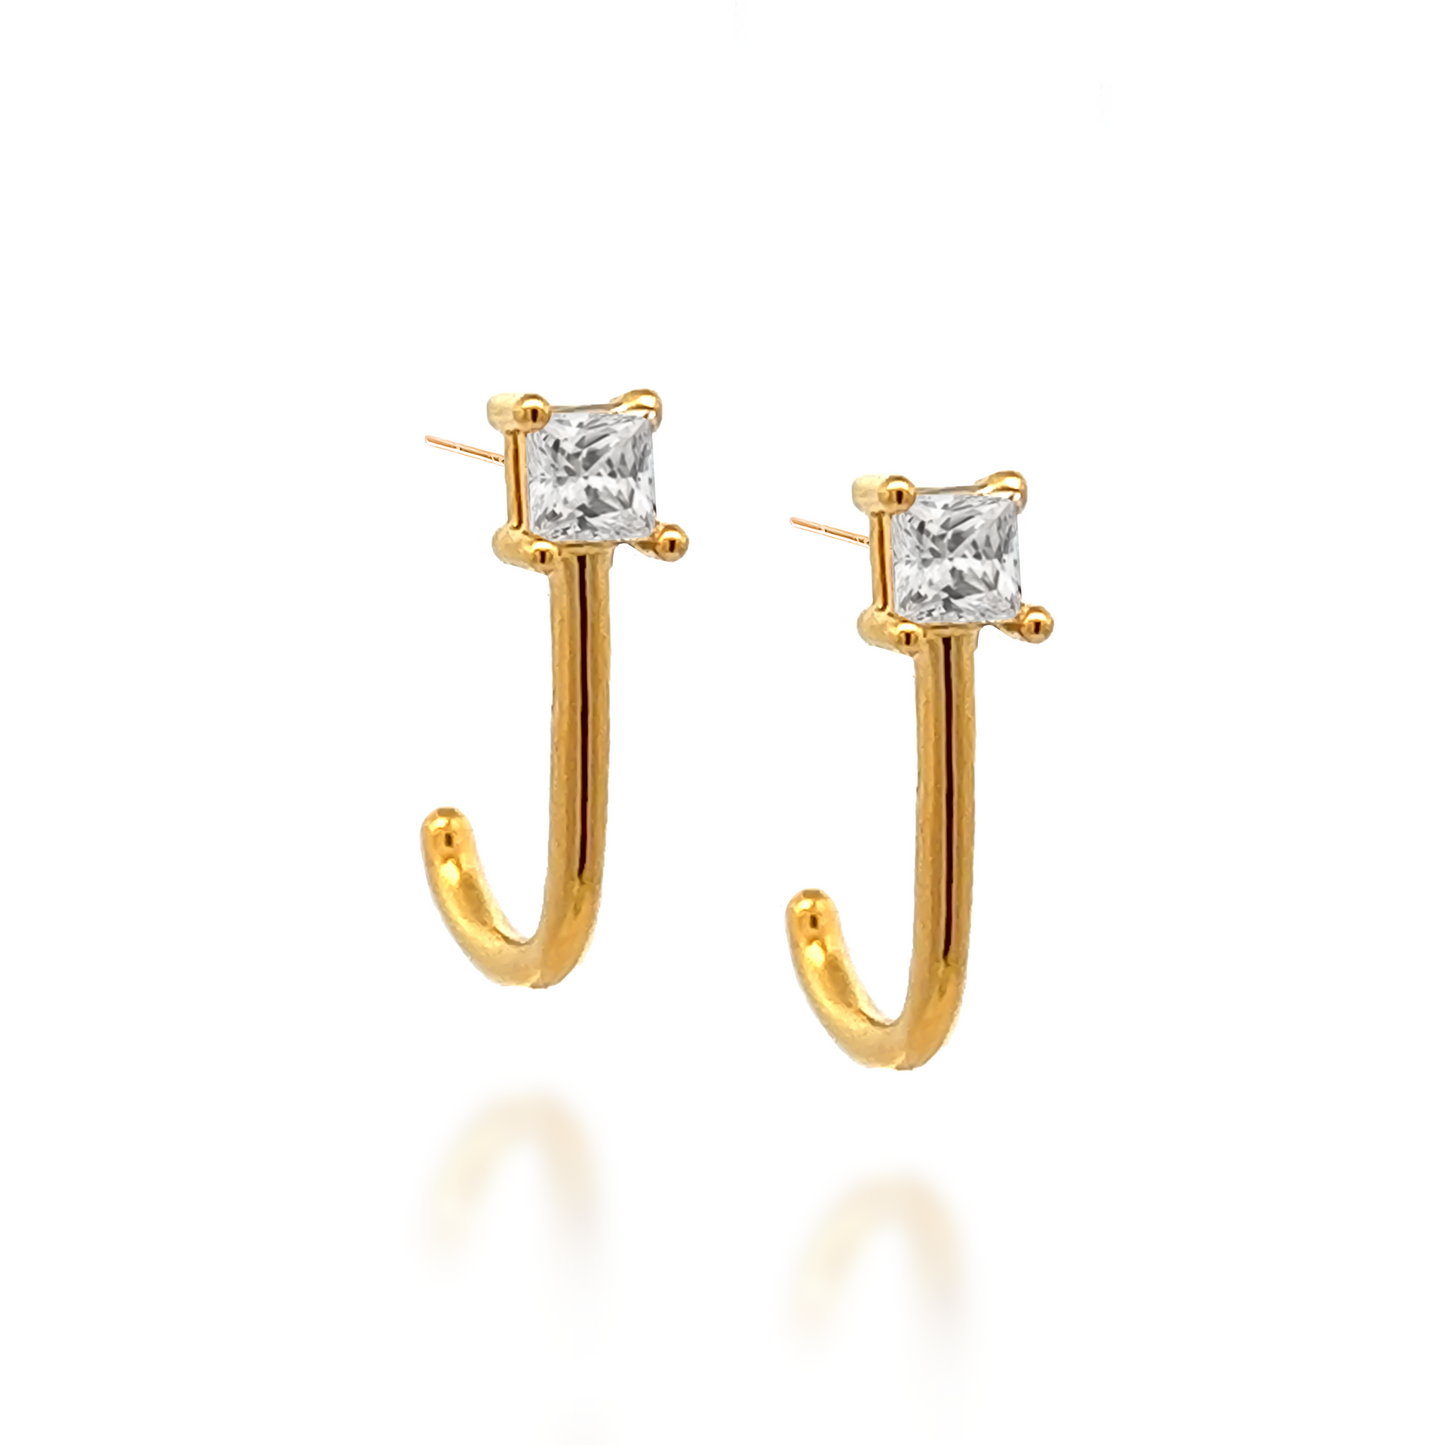 Soli Diamante Cane Earrings in Gold